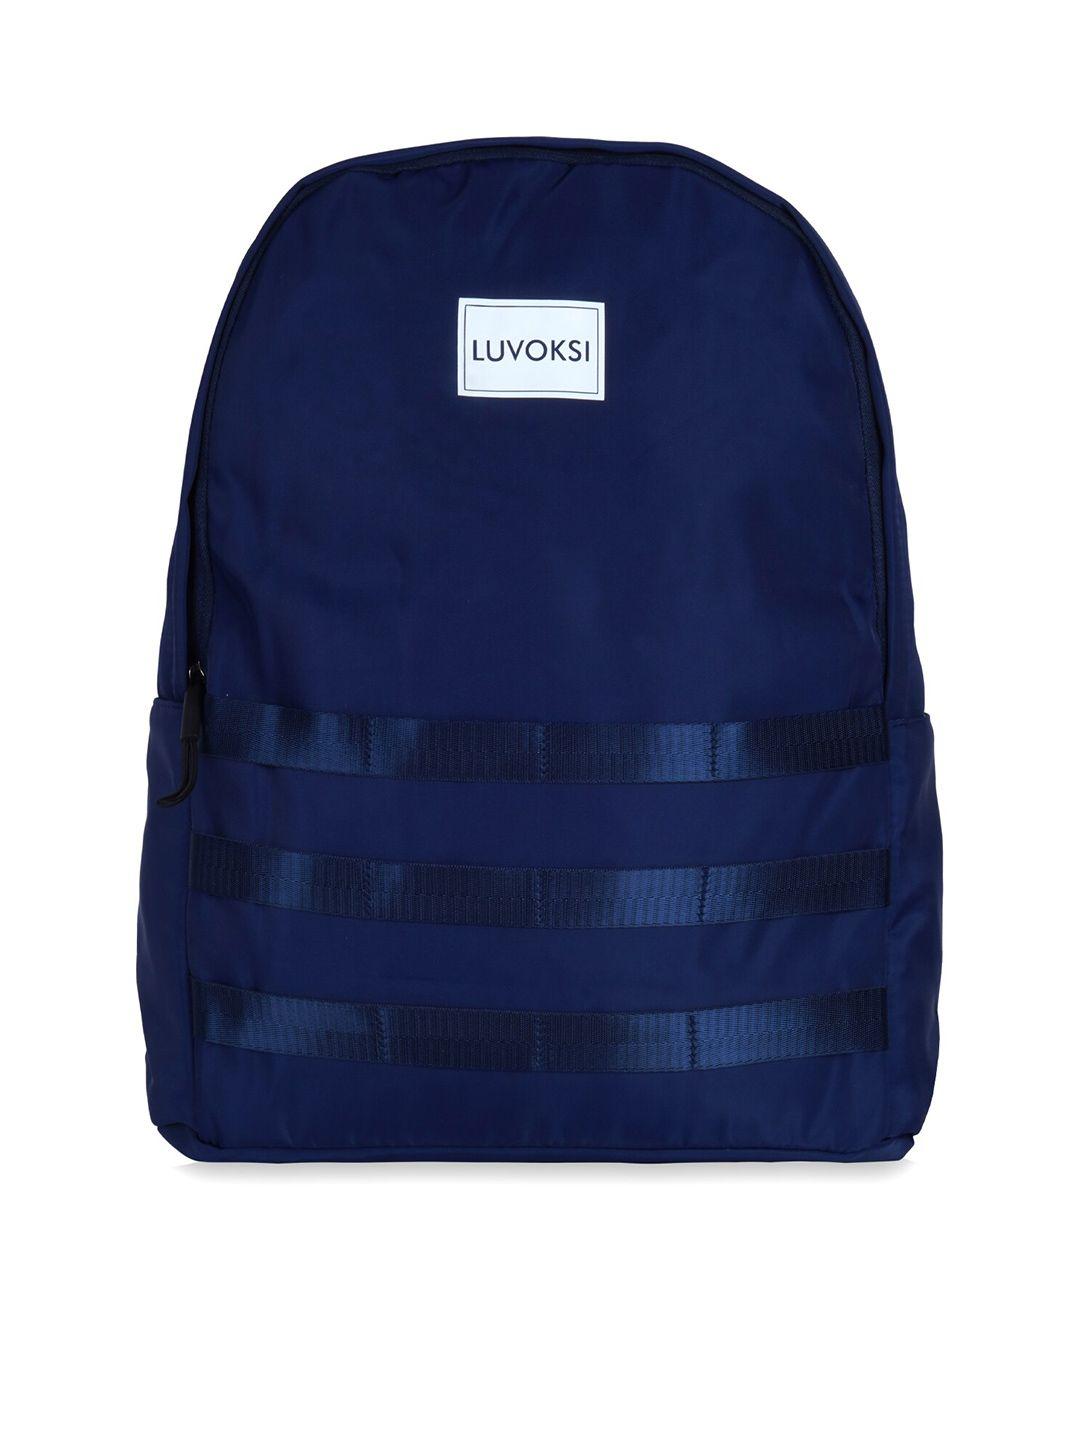 luvoksi women brand logo water resistant backpack